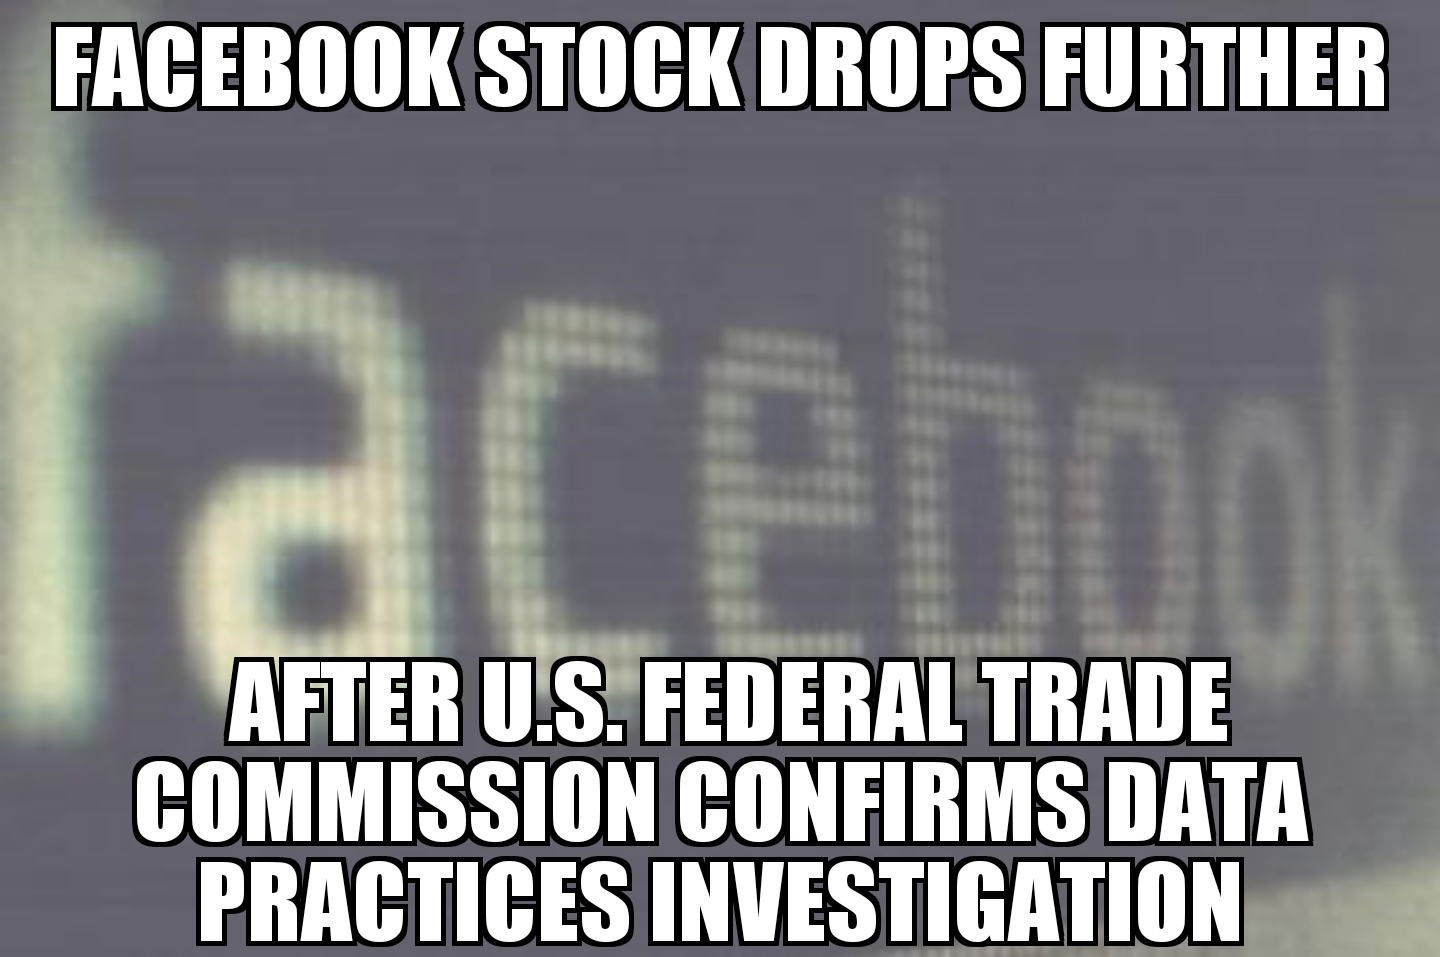 FTC confirms Facebook investigation